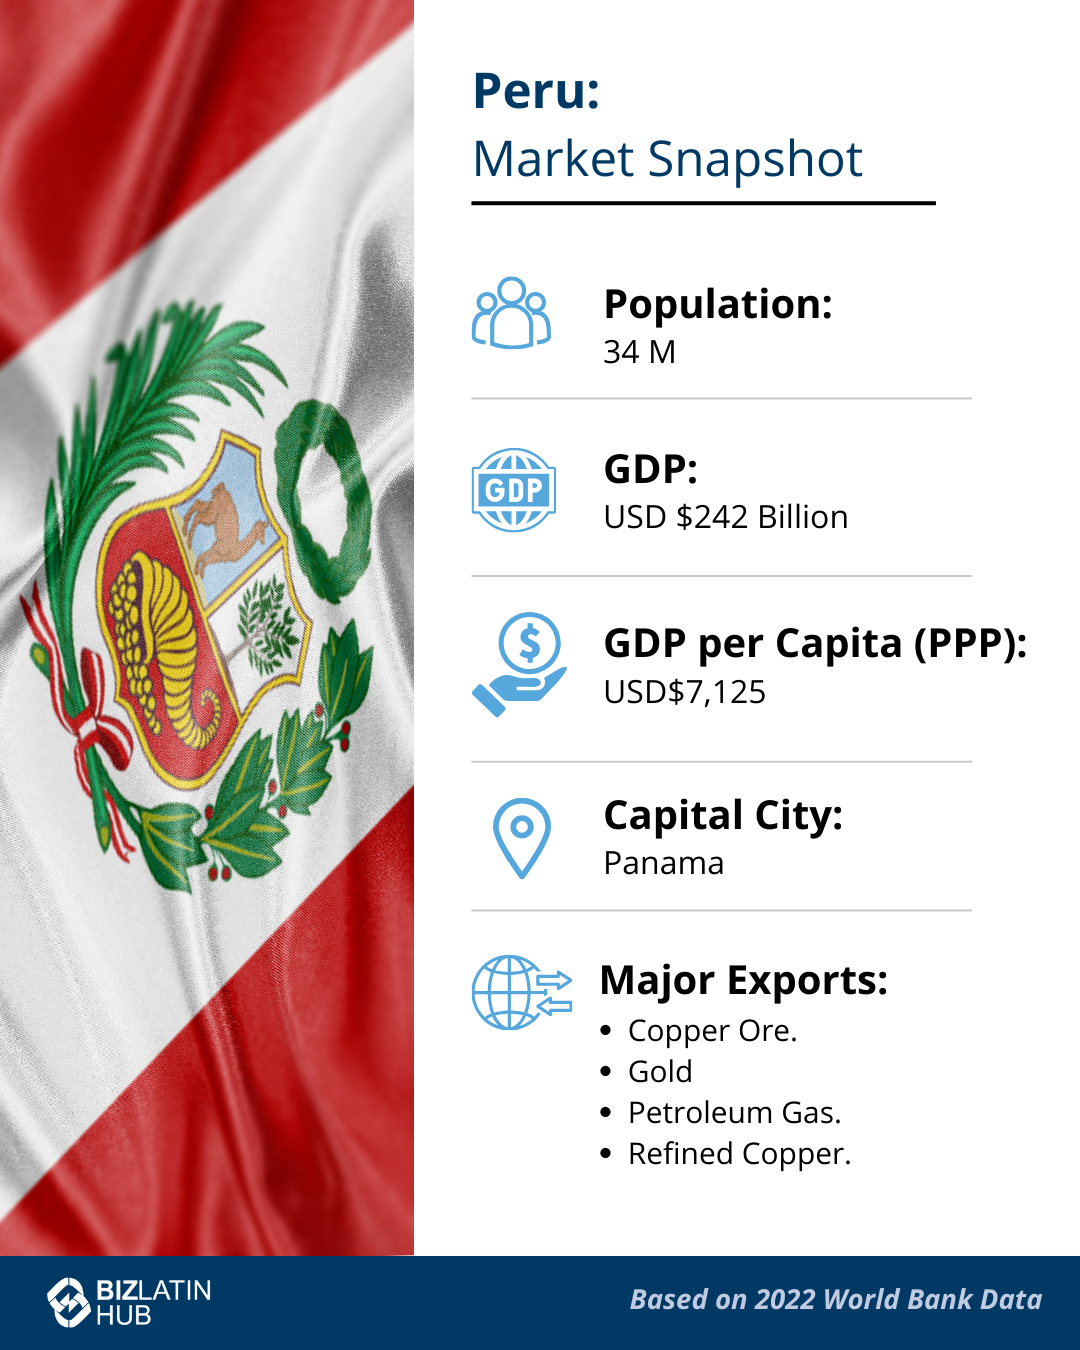 Doing business in Peru a market snapshot by Biz latin hub